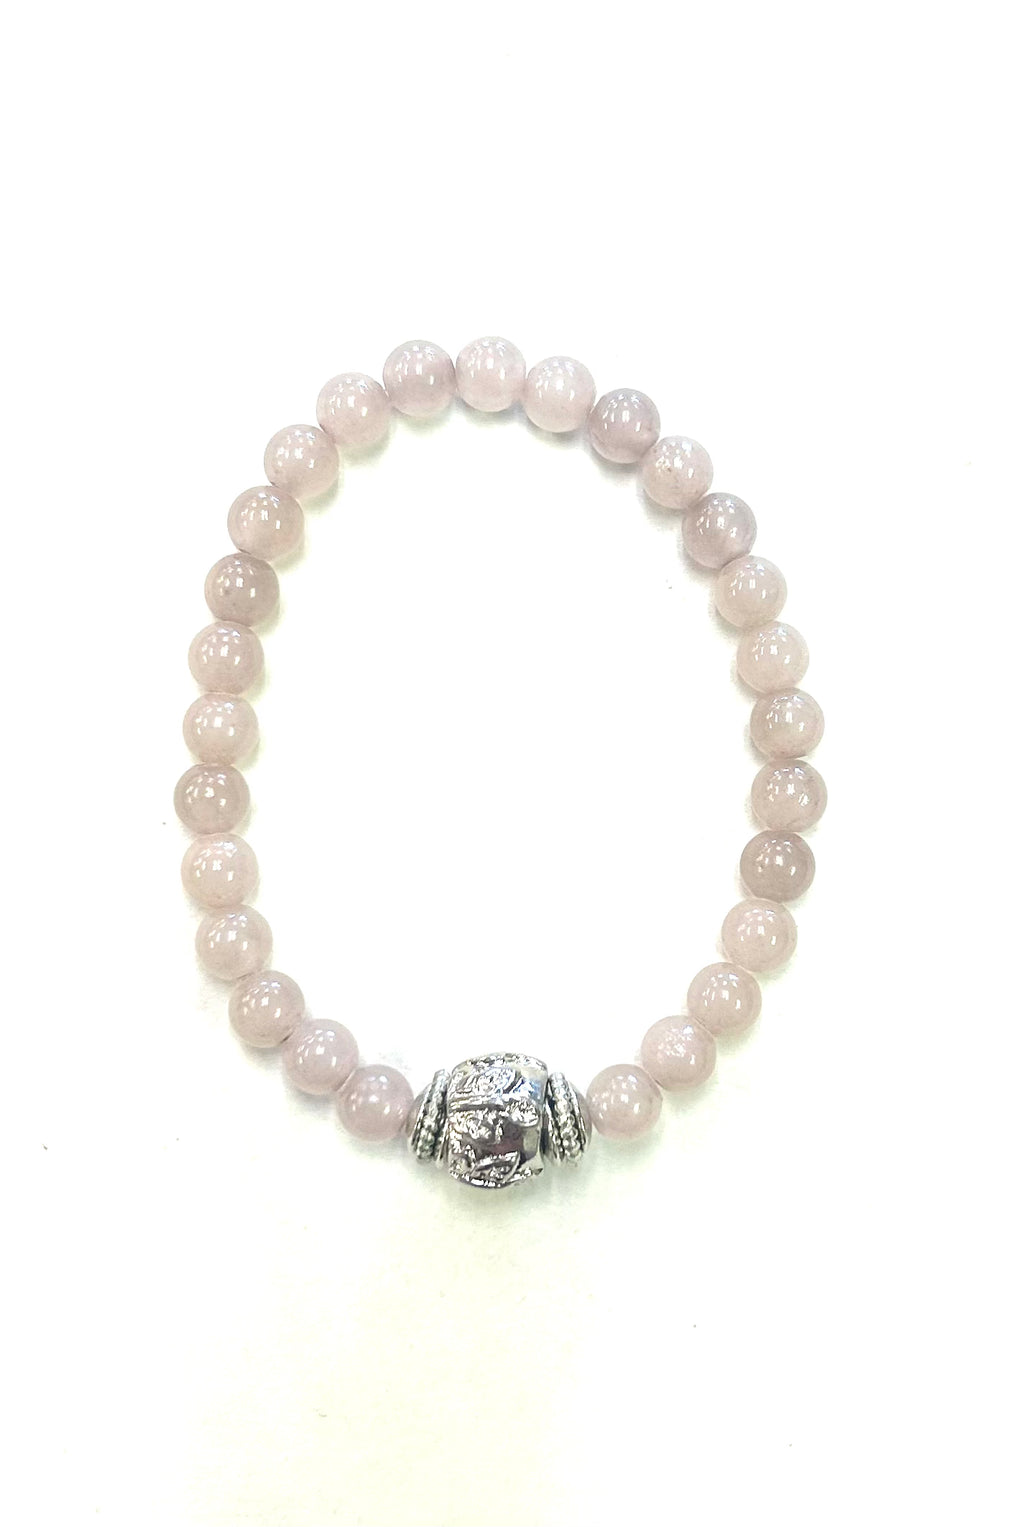 Rose Quartz Bracelet - Small Bead - Lighten Up Shop